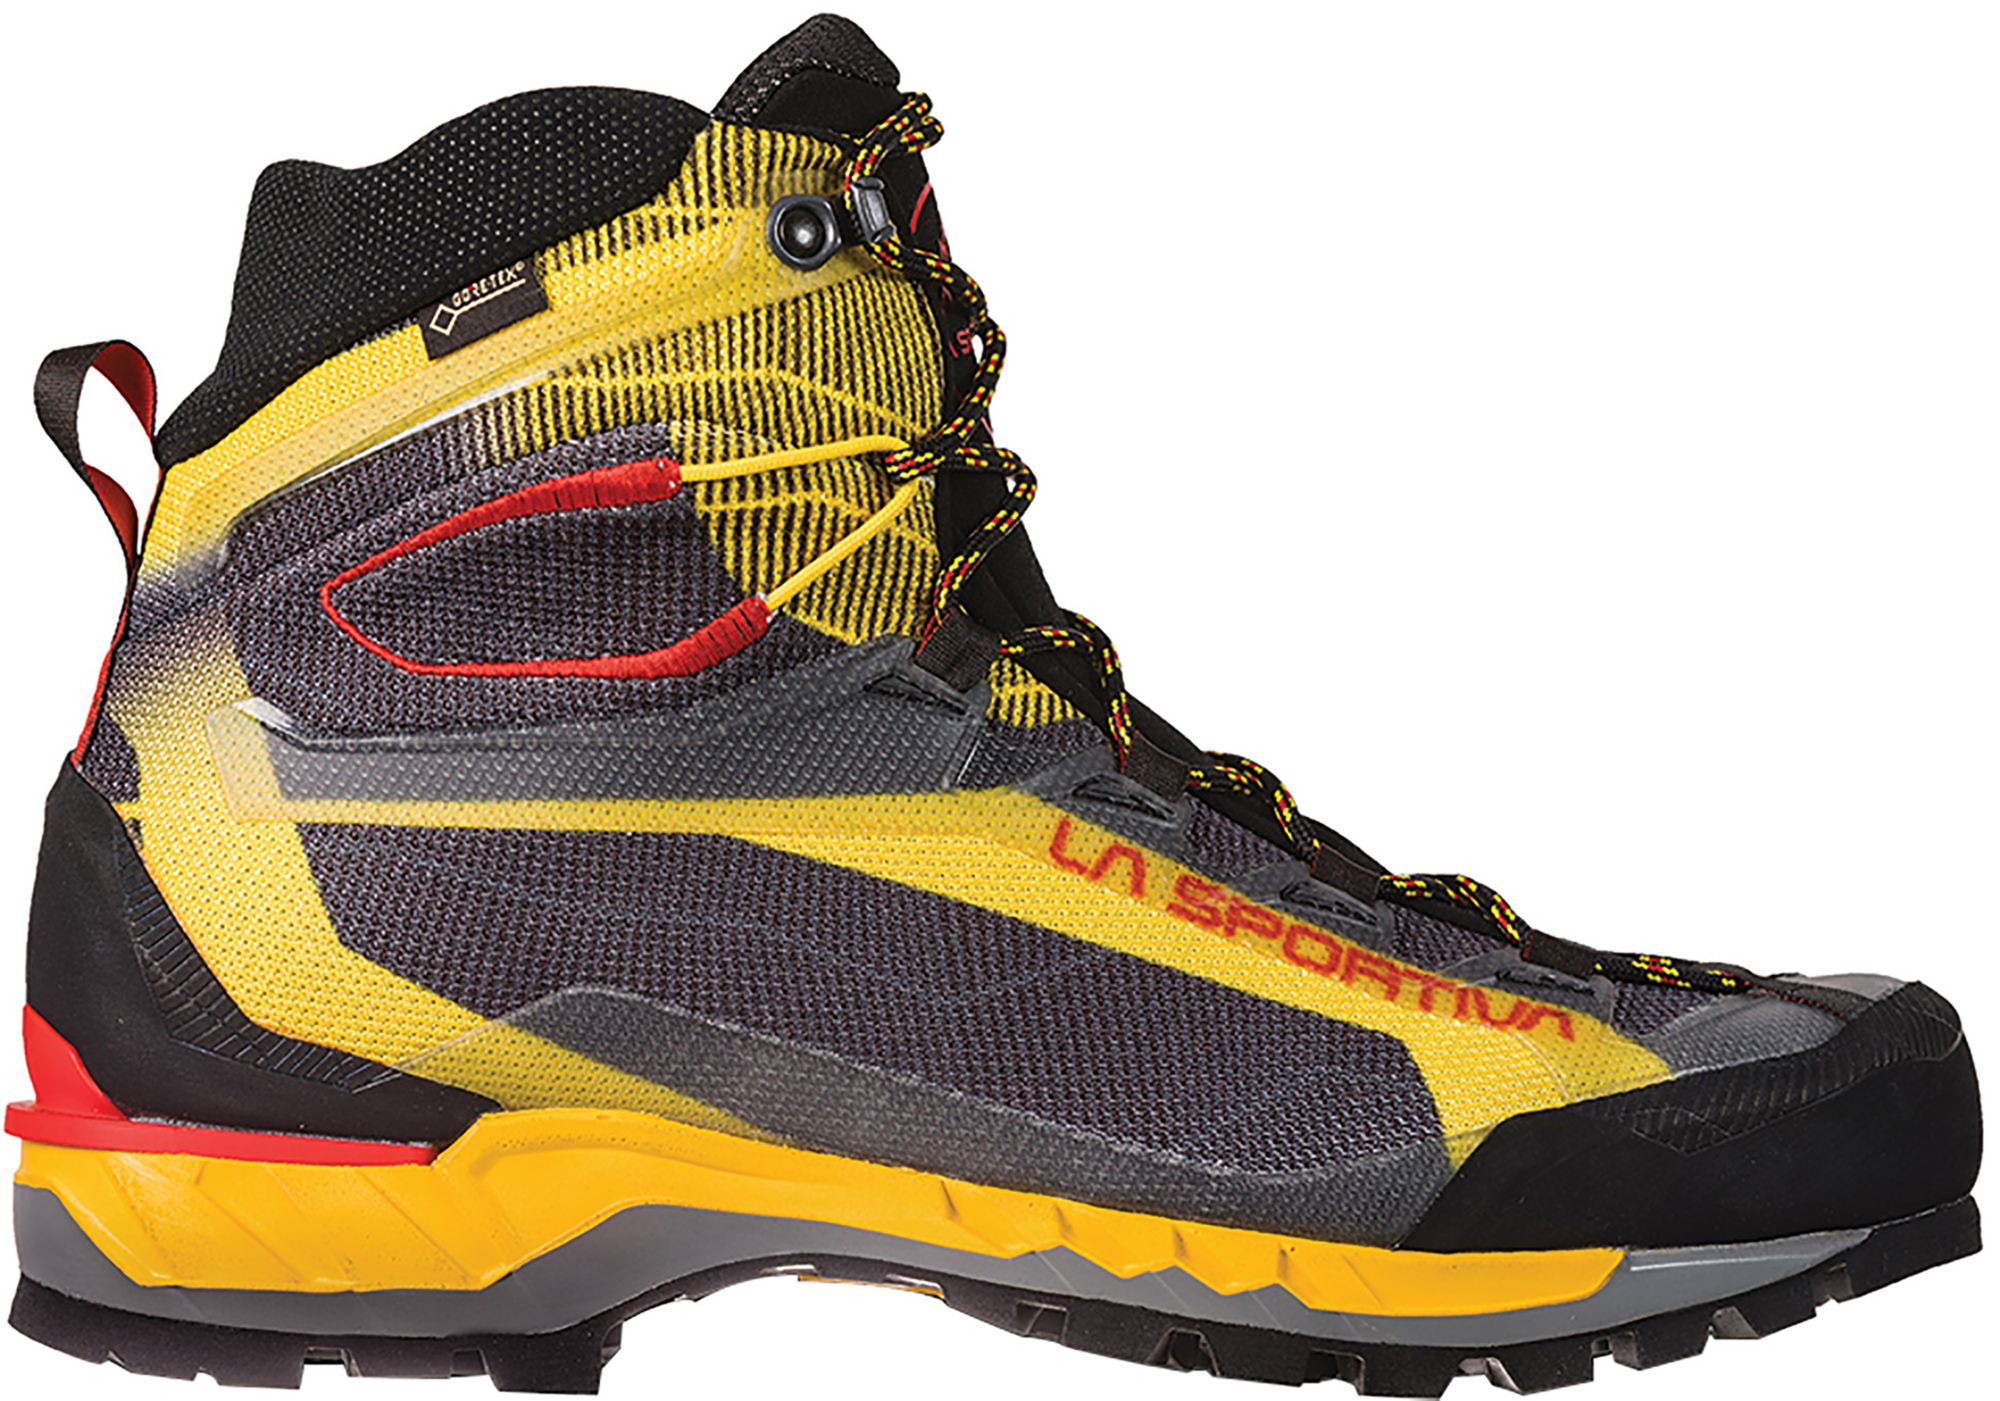 Photos - Trekking Shoes La Sportiva Men's Trango Tech GTX Hiking Boots, Size 41, Black/Yellow 21QP 